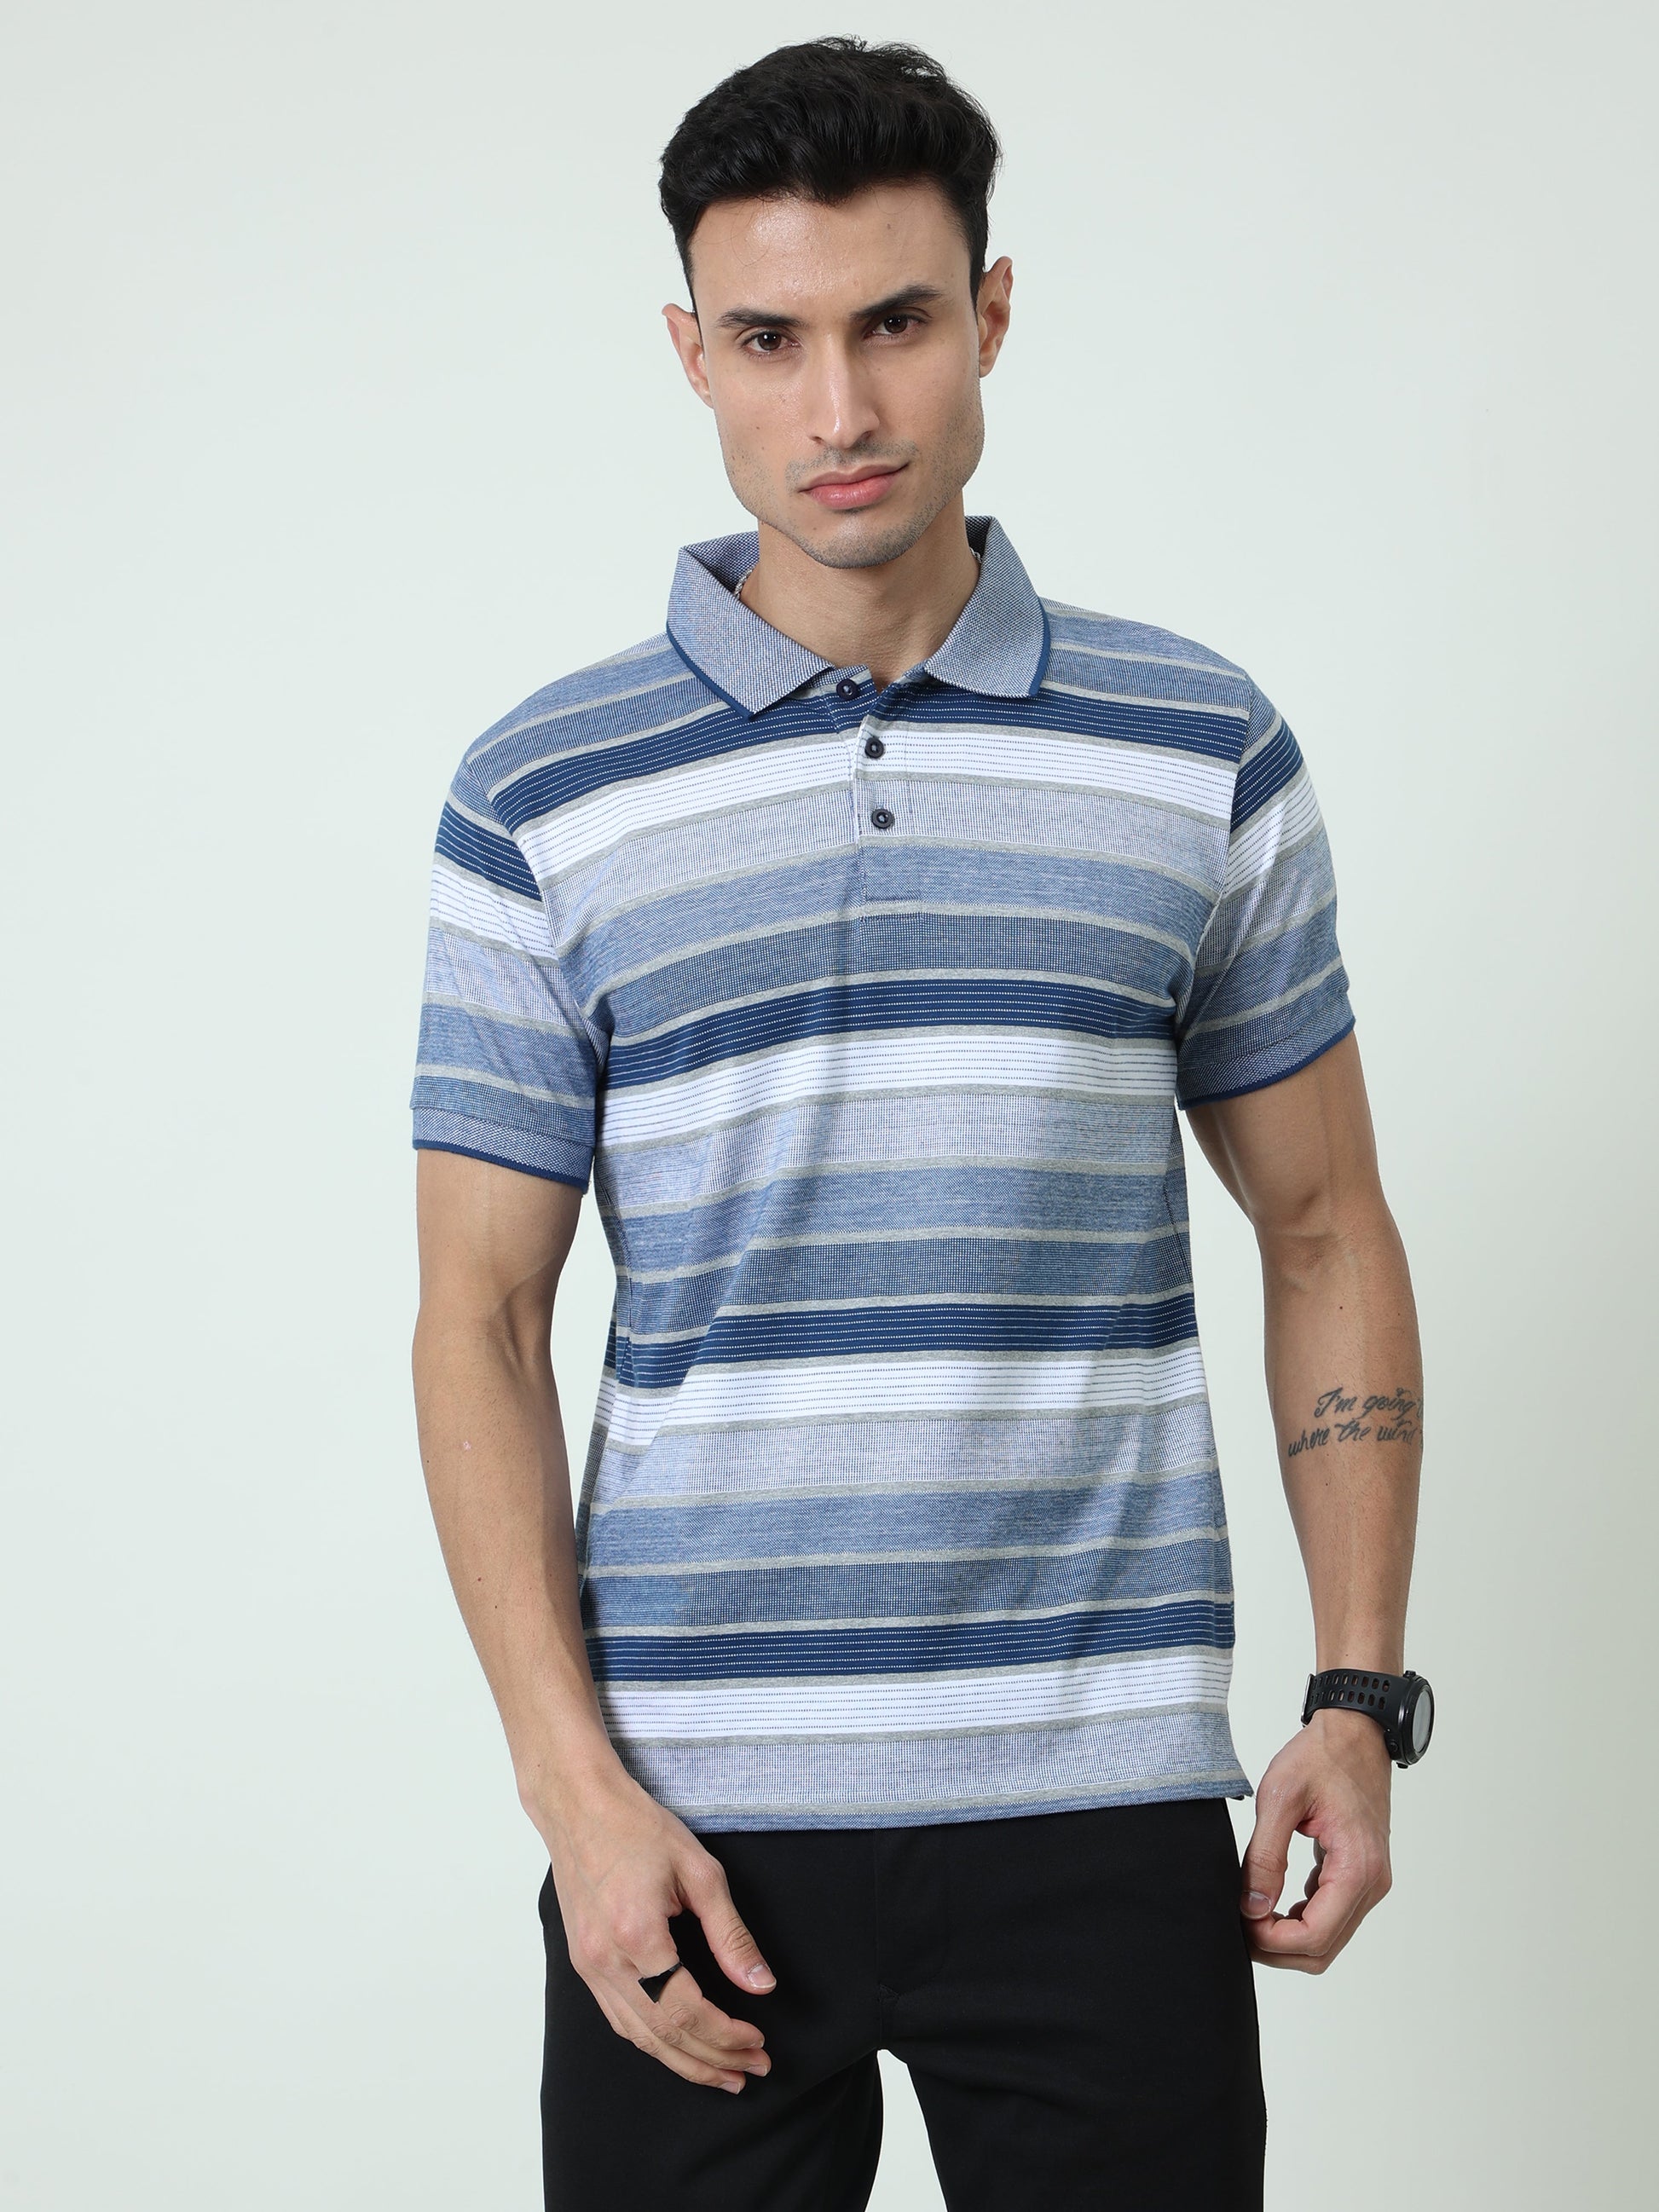 Back to Business - Men's Premium Collar T-Shirt Blue Stripes